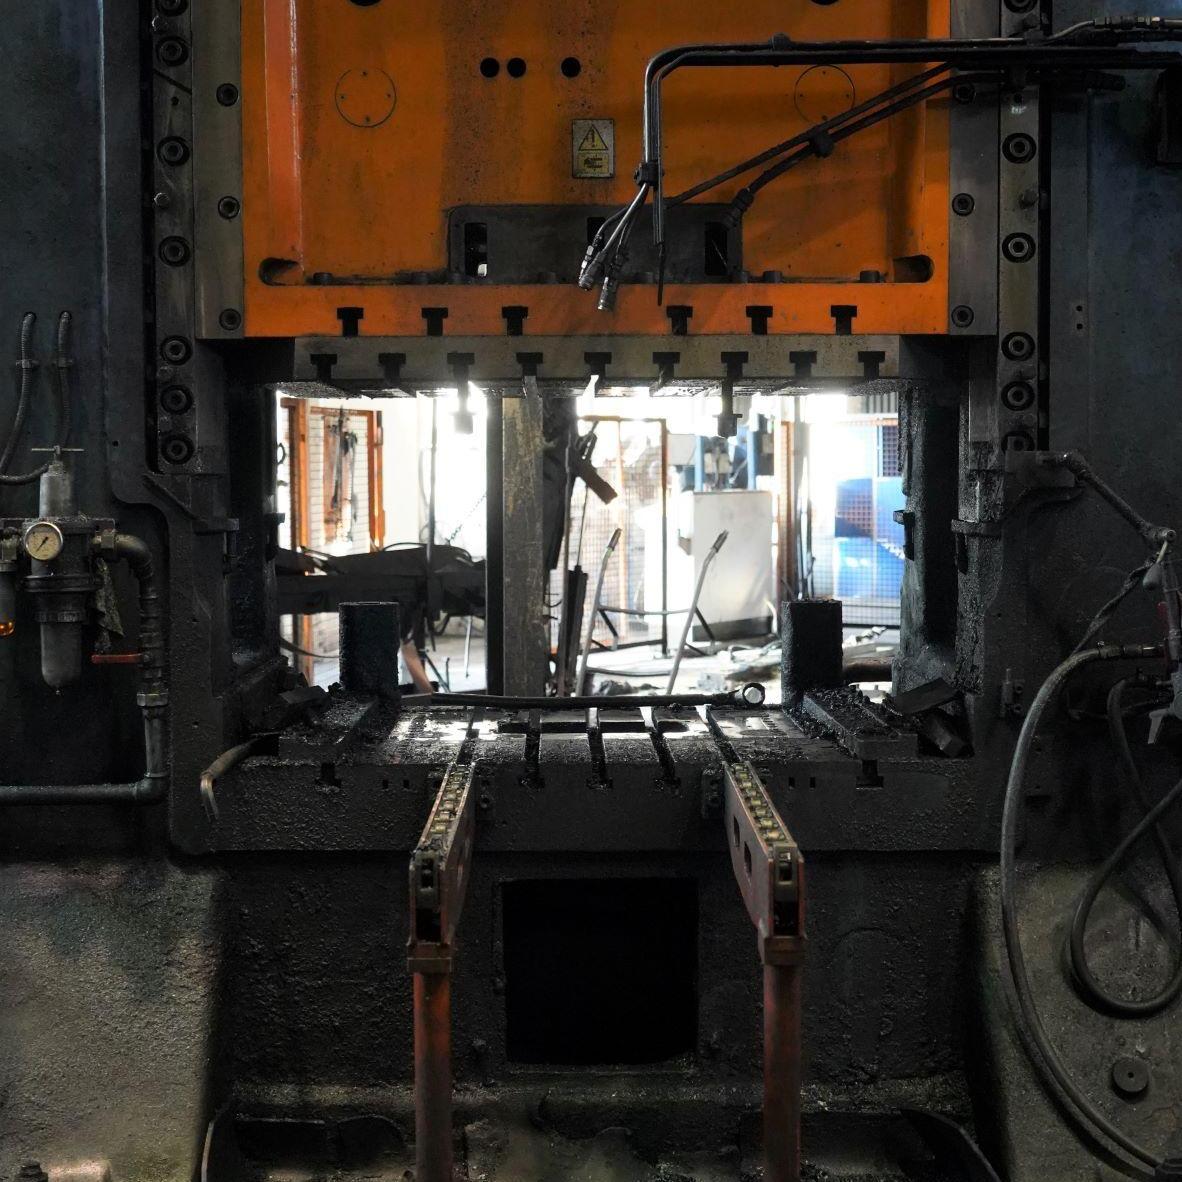 Hot trimming press